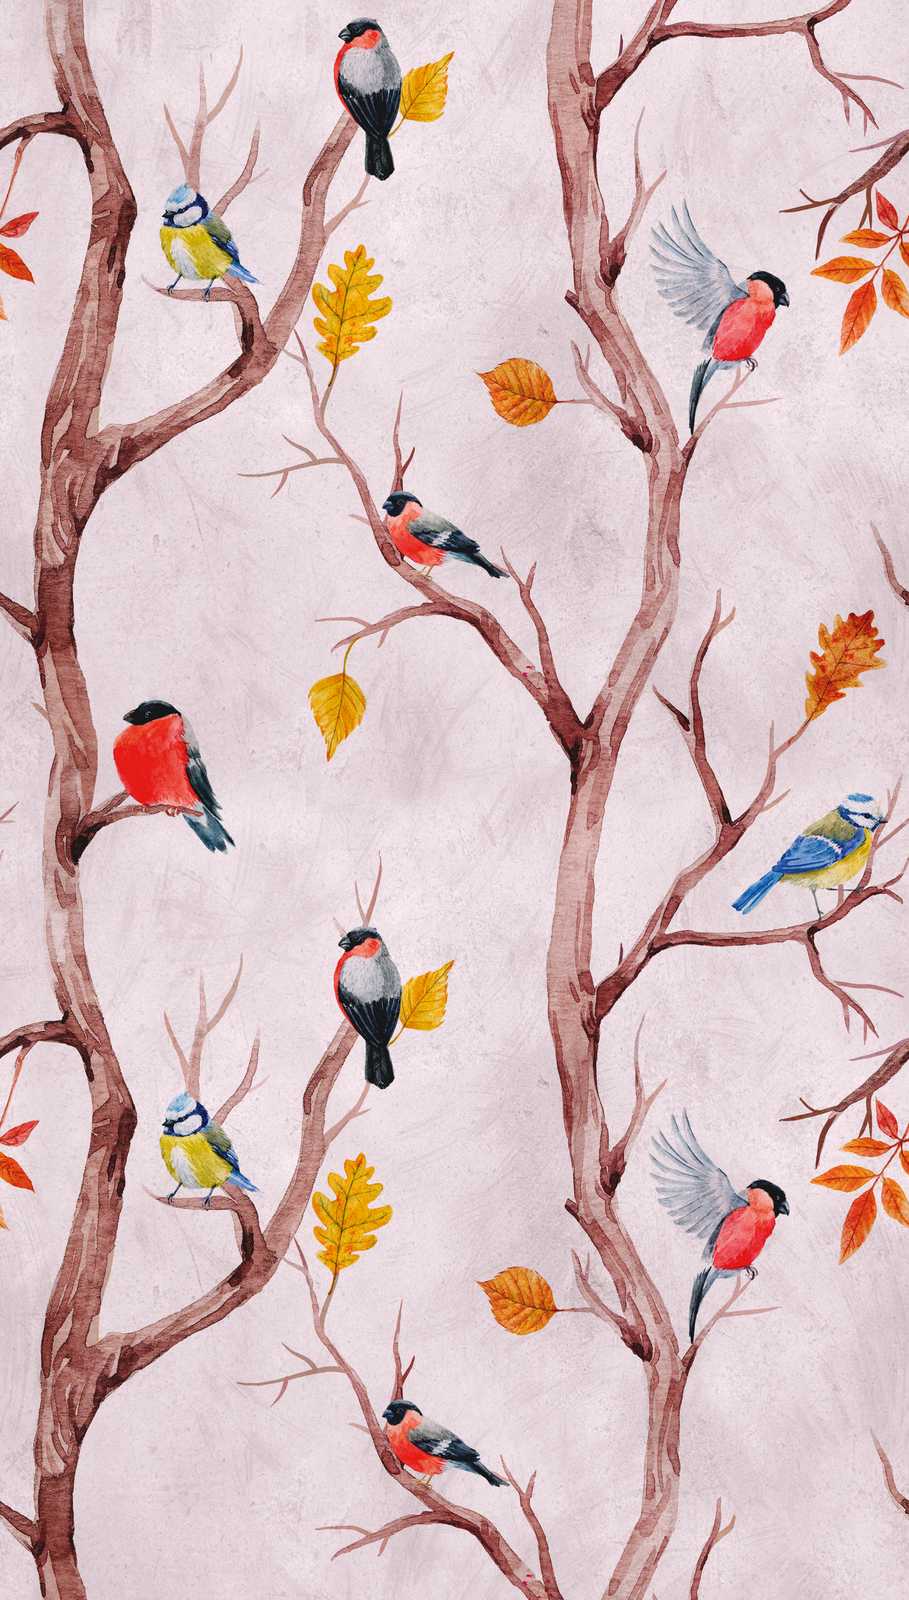             Wallpaper novelty - motif wallpaper with bird motif in watercolour style
        